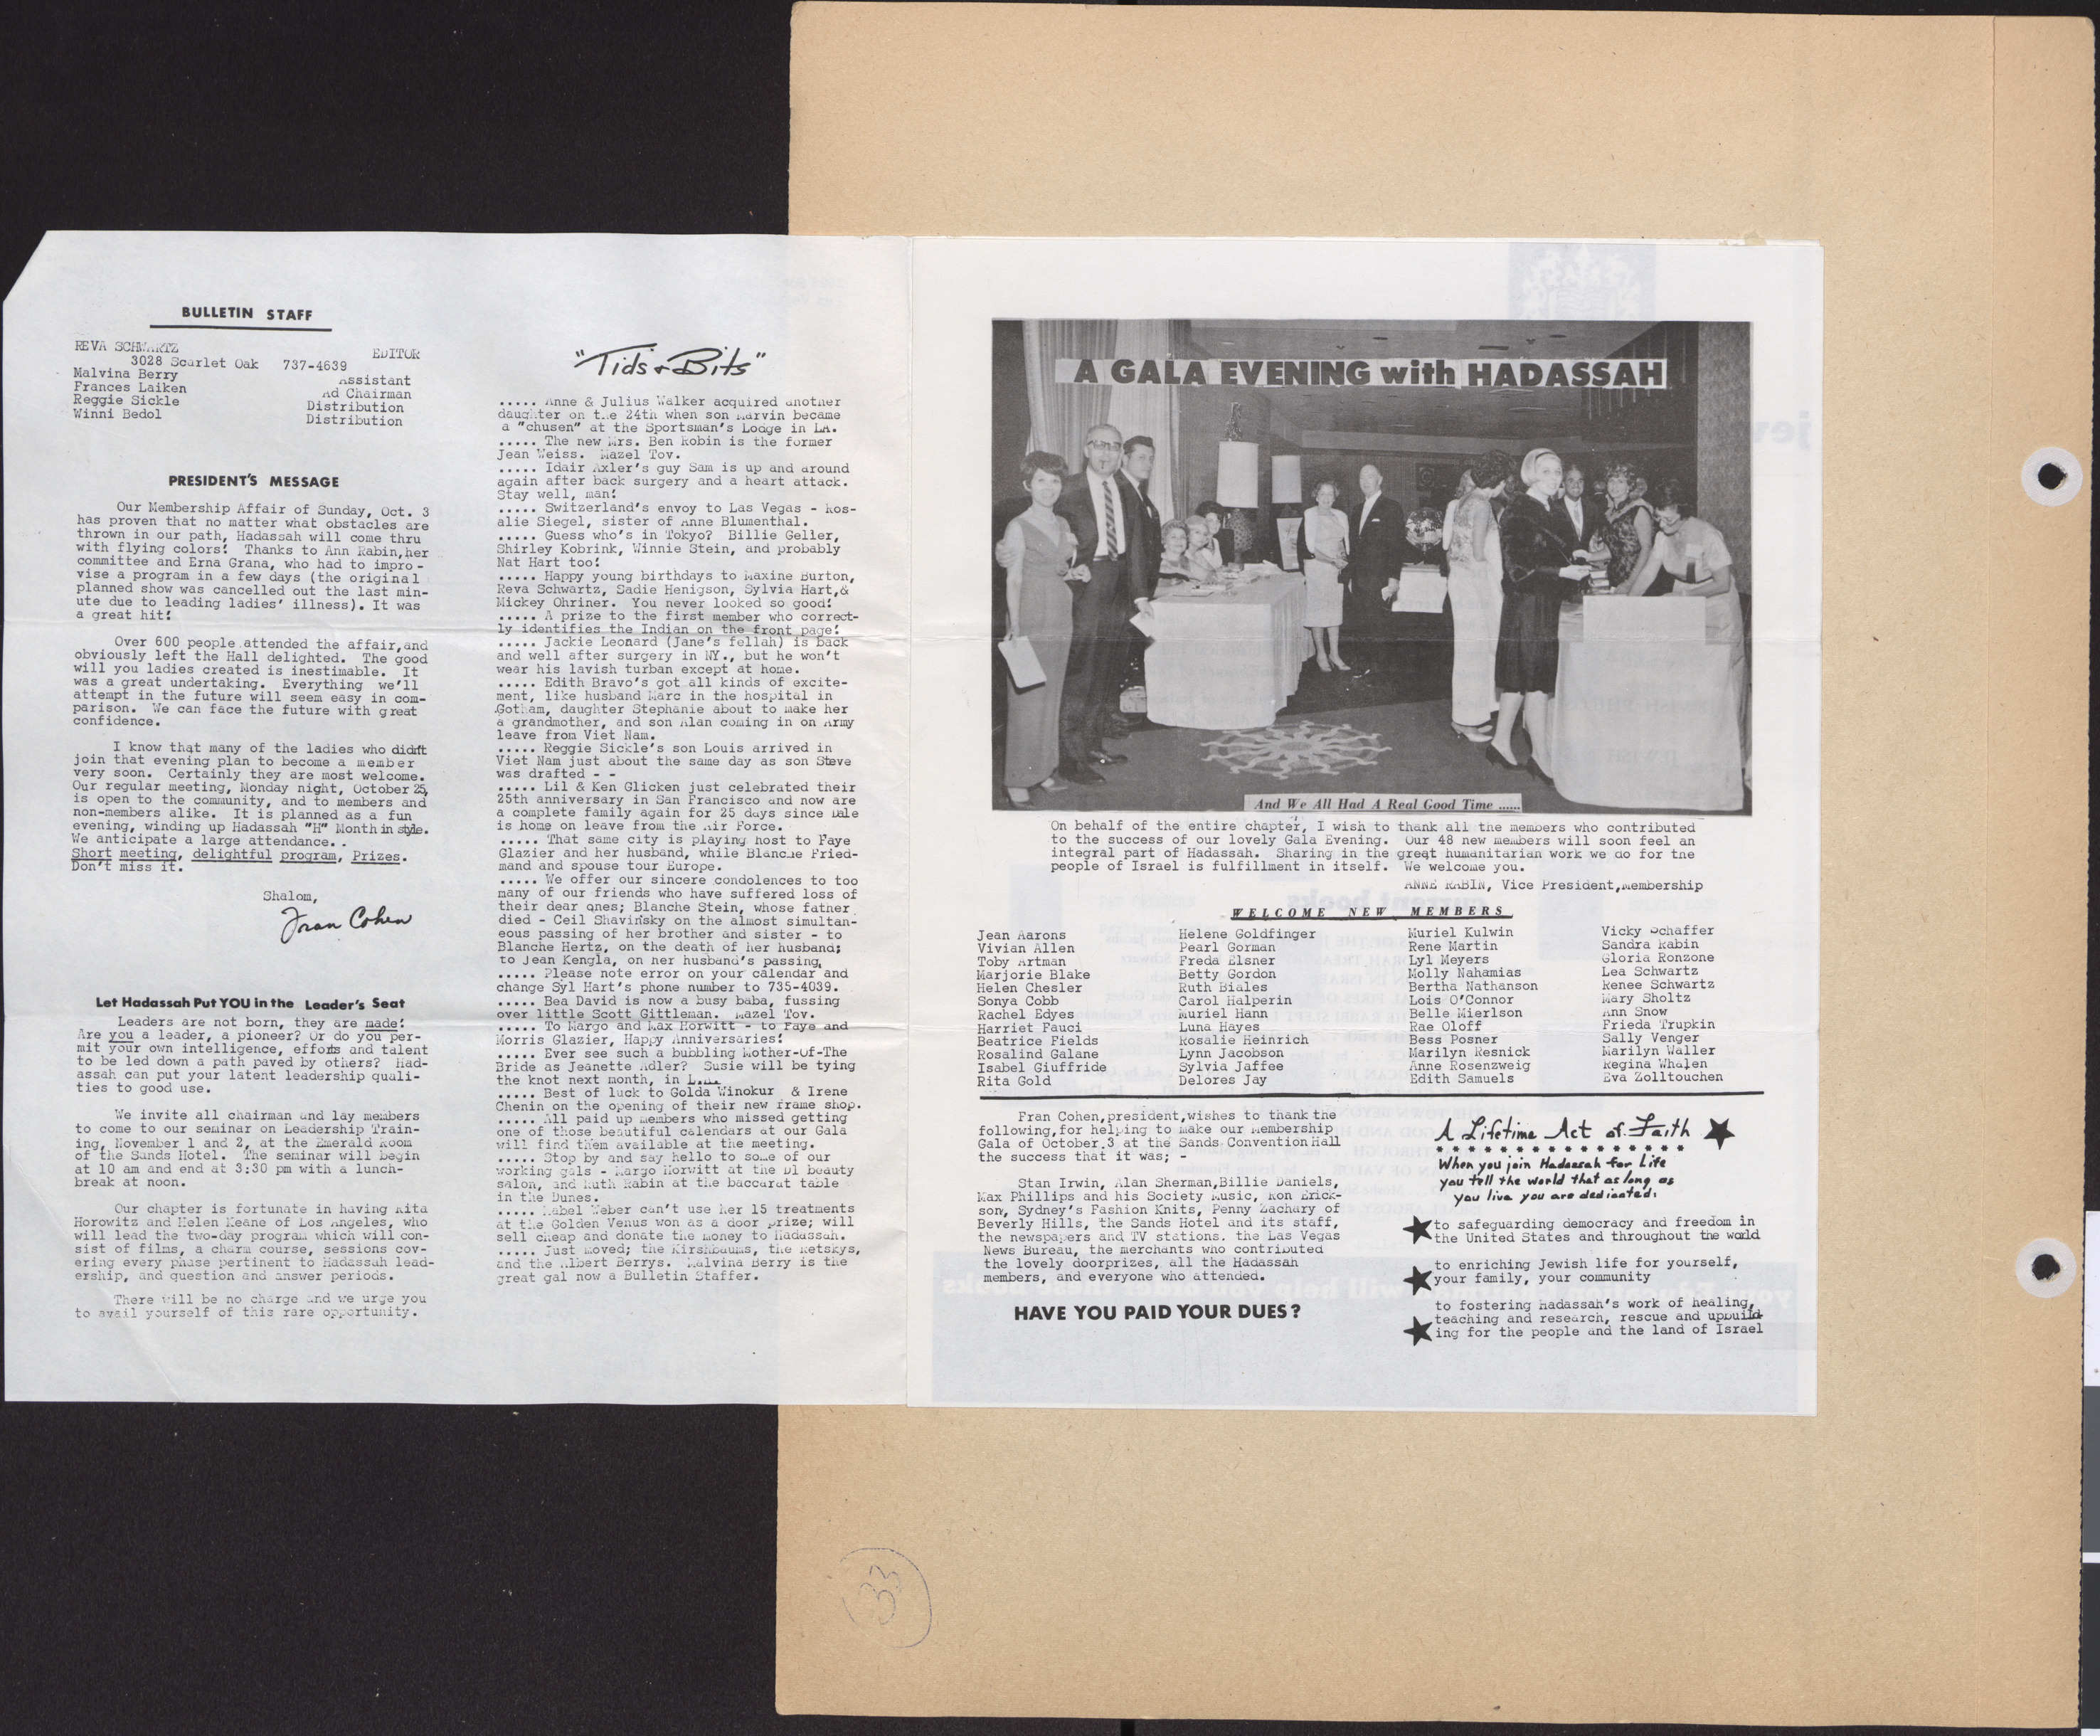 Hadassah Las Vegas Chapter newsletter, October 1965, page 2-3